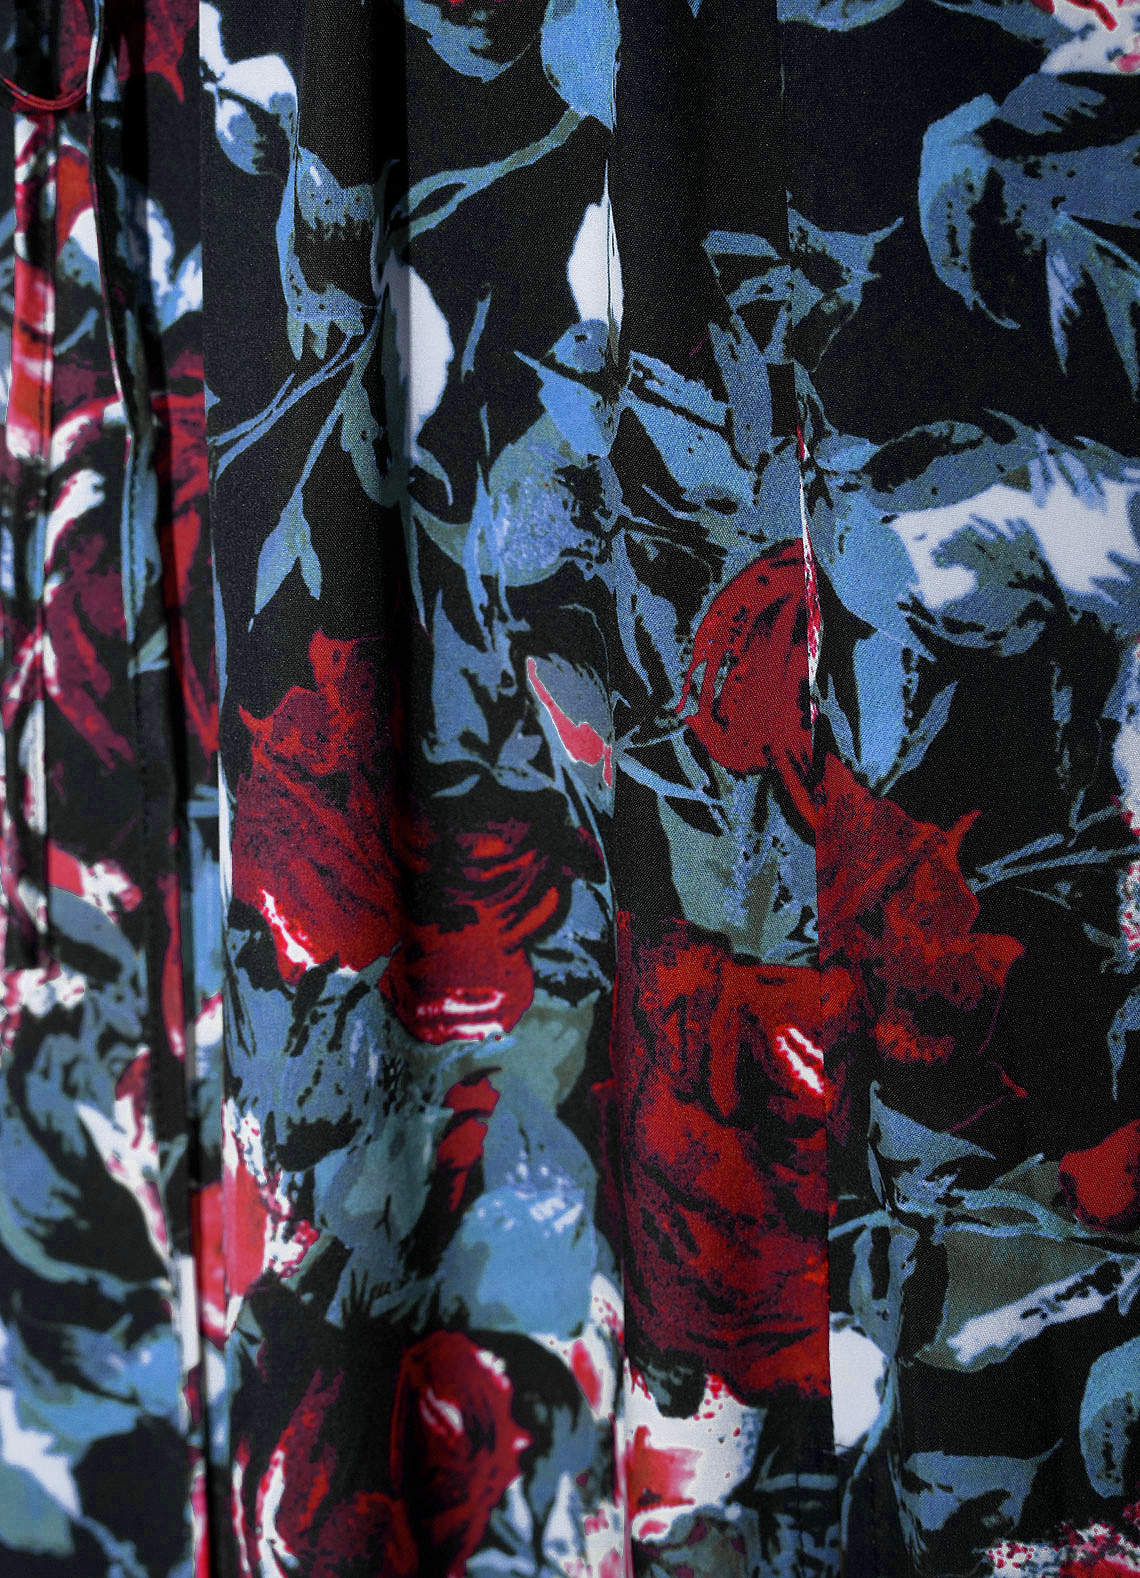 Watch Me Bloom Black Floral Print Halter Maxi Dress image1